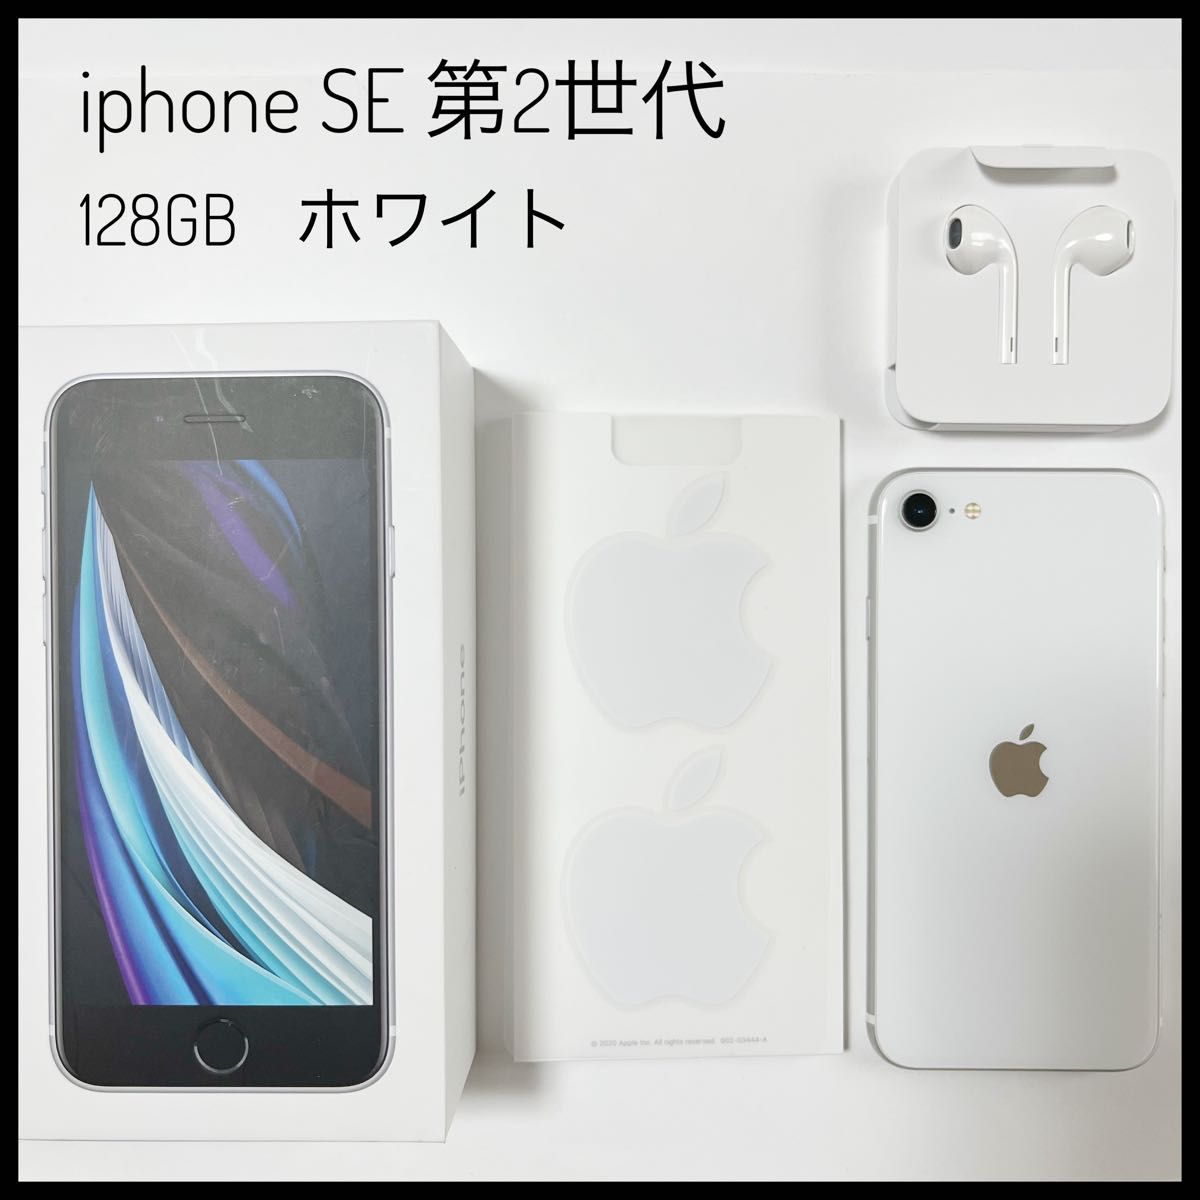 iPhone SE 第2世代 ホワイト 128GB - スマートフォン本体